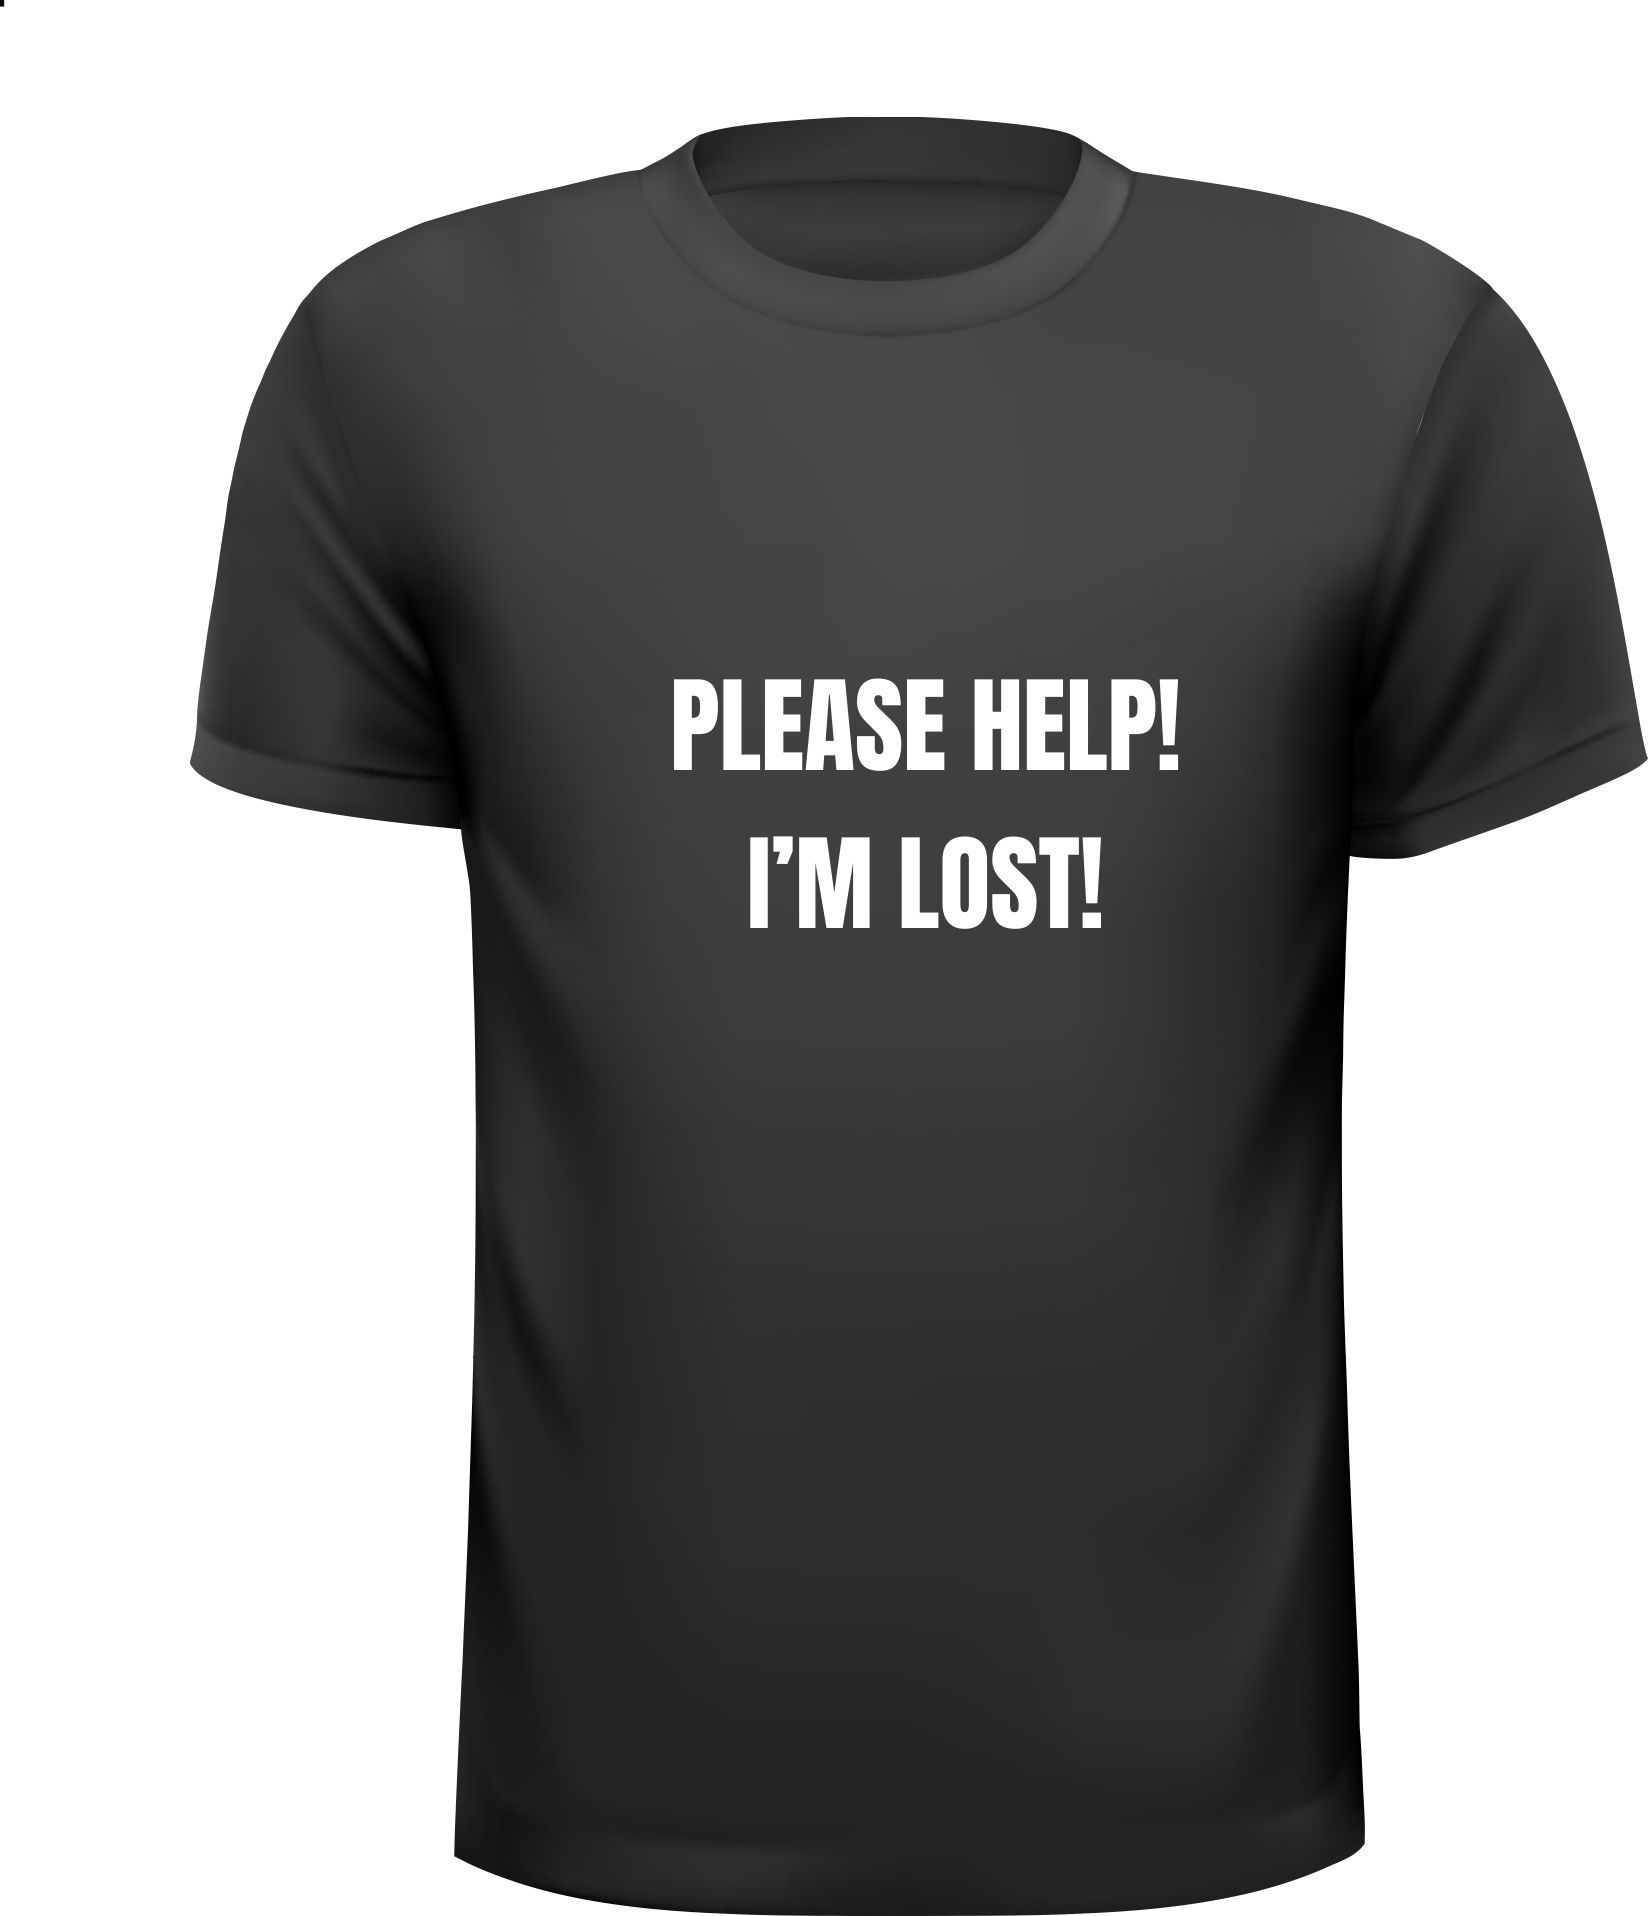 T-shirt please help! i'm lost!